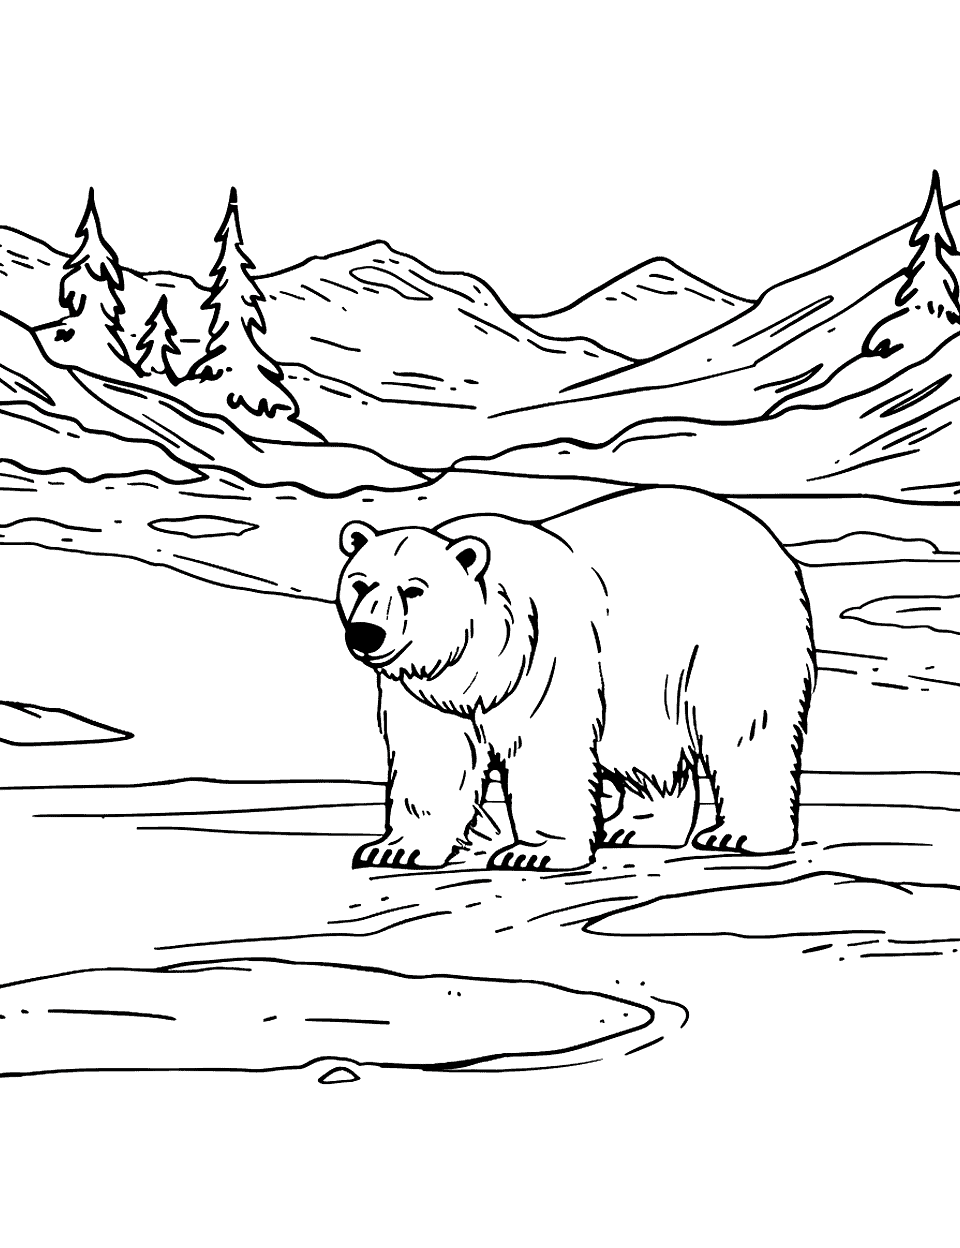 Arctic Landscape with Polar Bear Coloring Page - A lone polar bear wandering across a vast, snowy tundra.